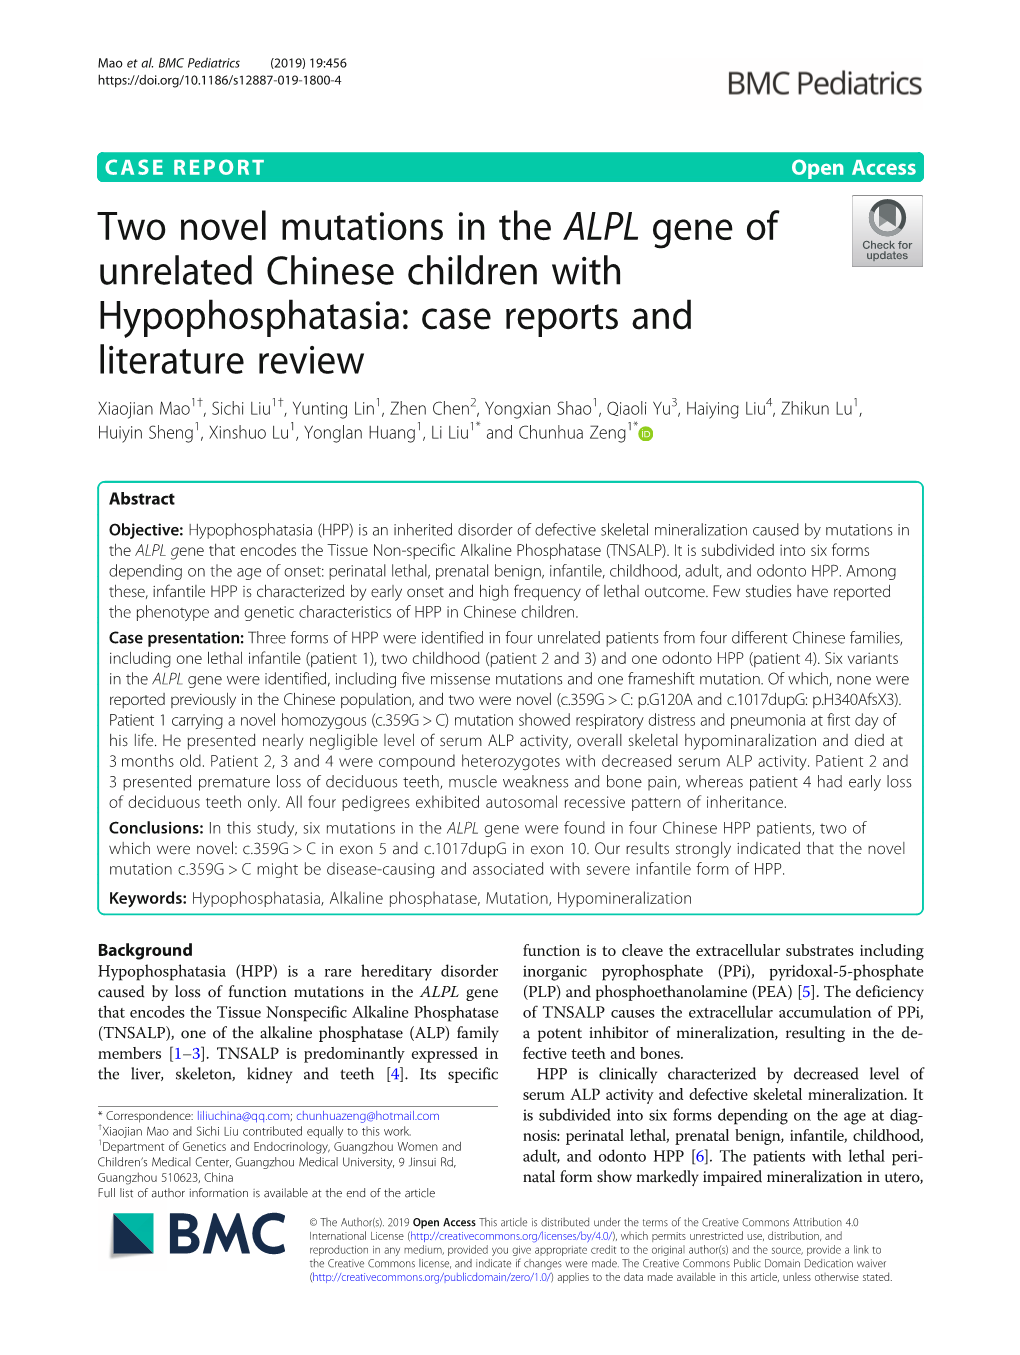 Two Novel Mutations in the ALPL Gene of Unrelated